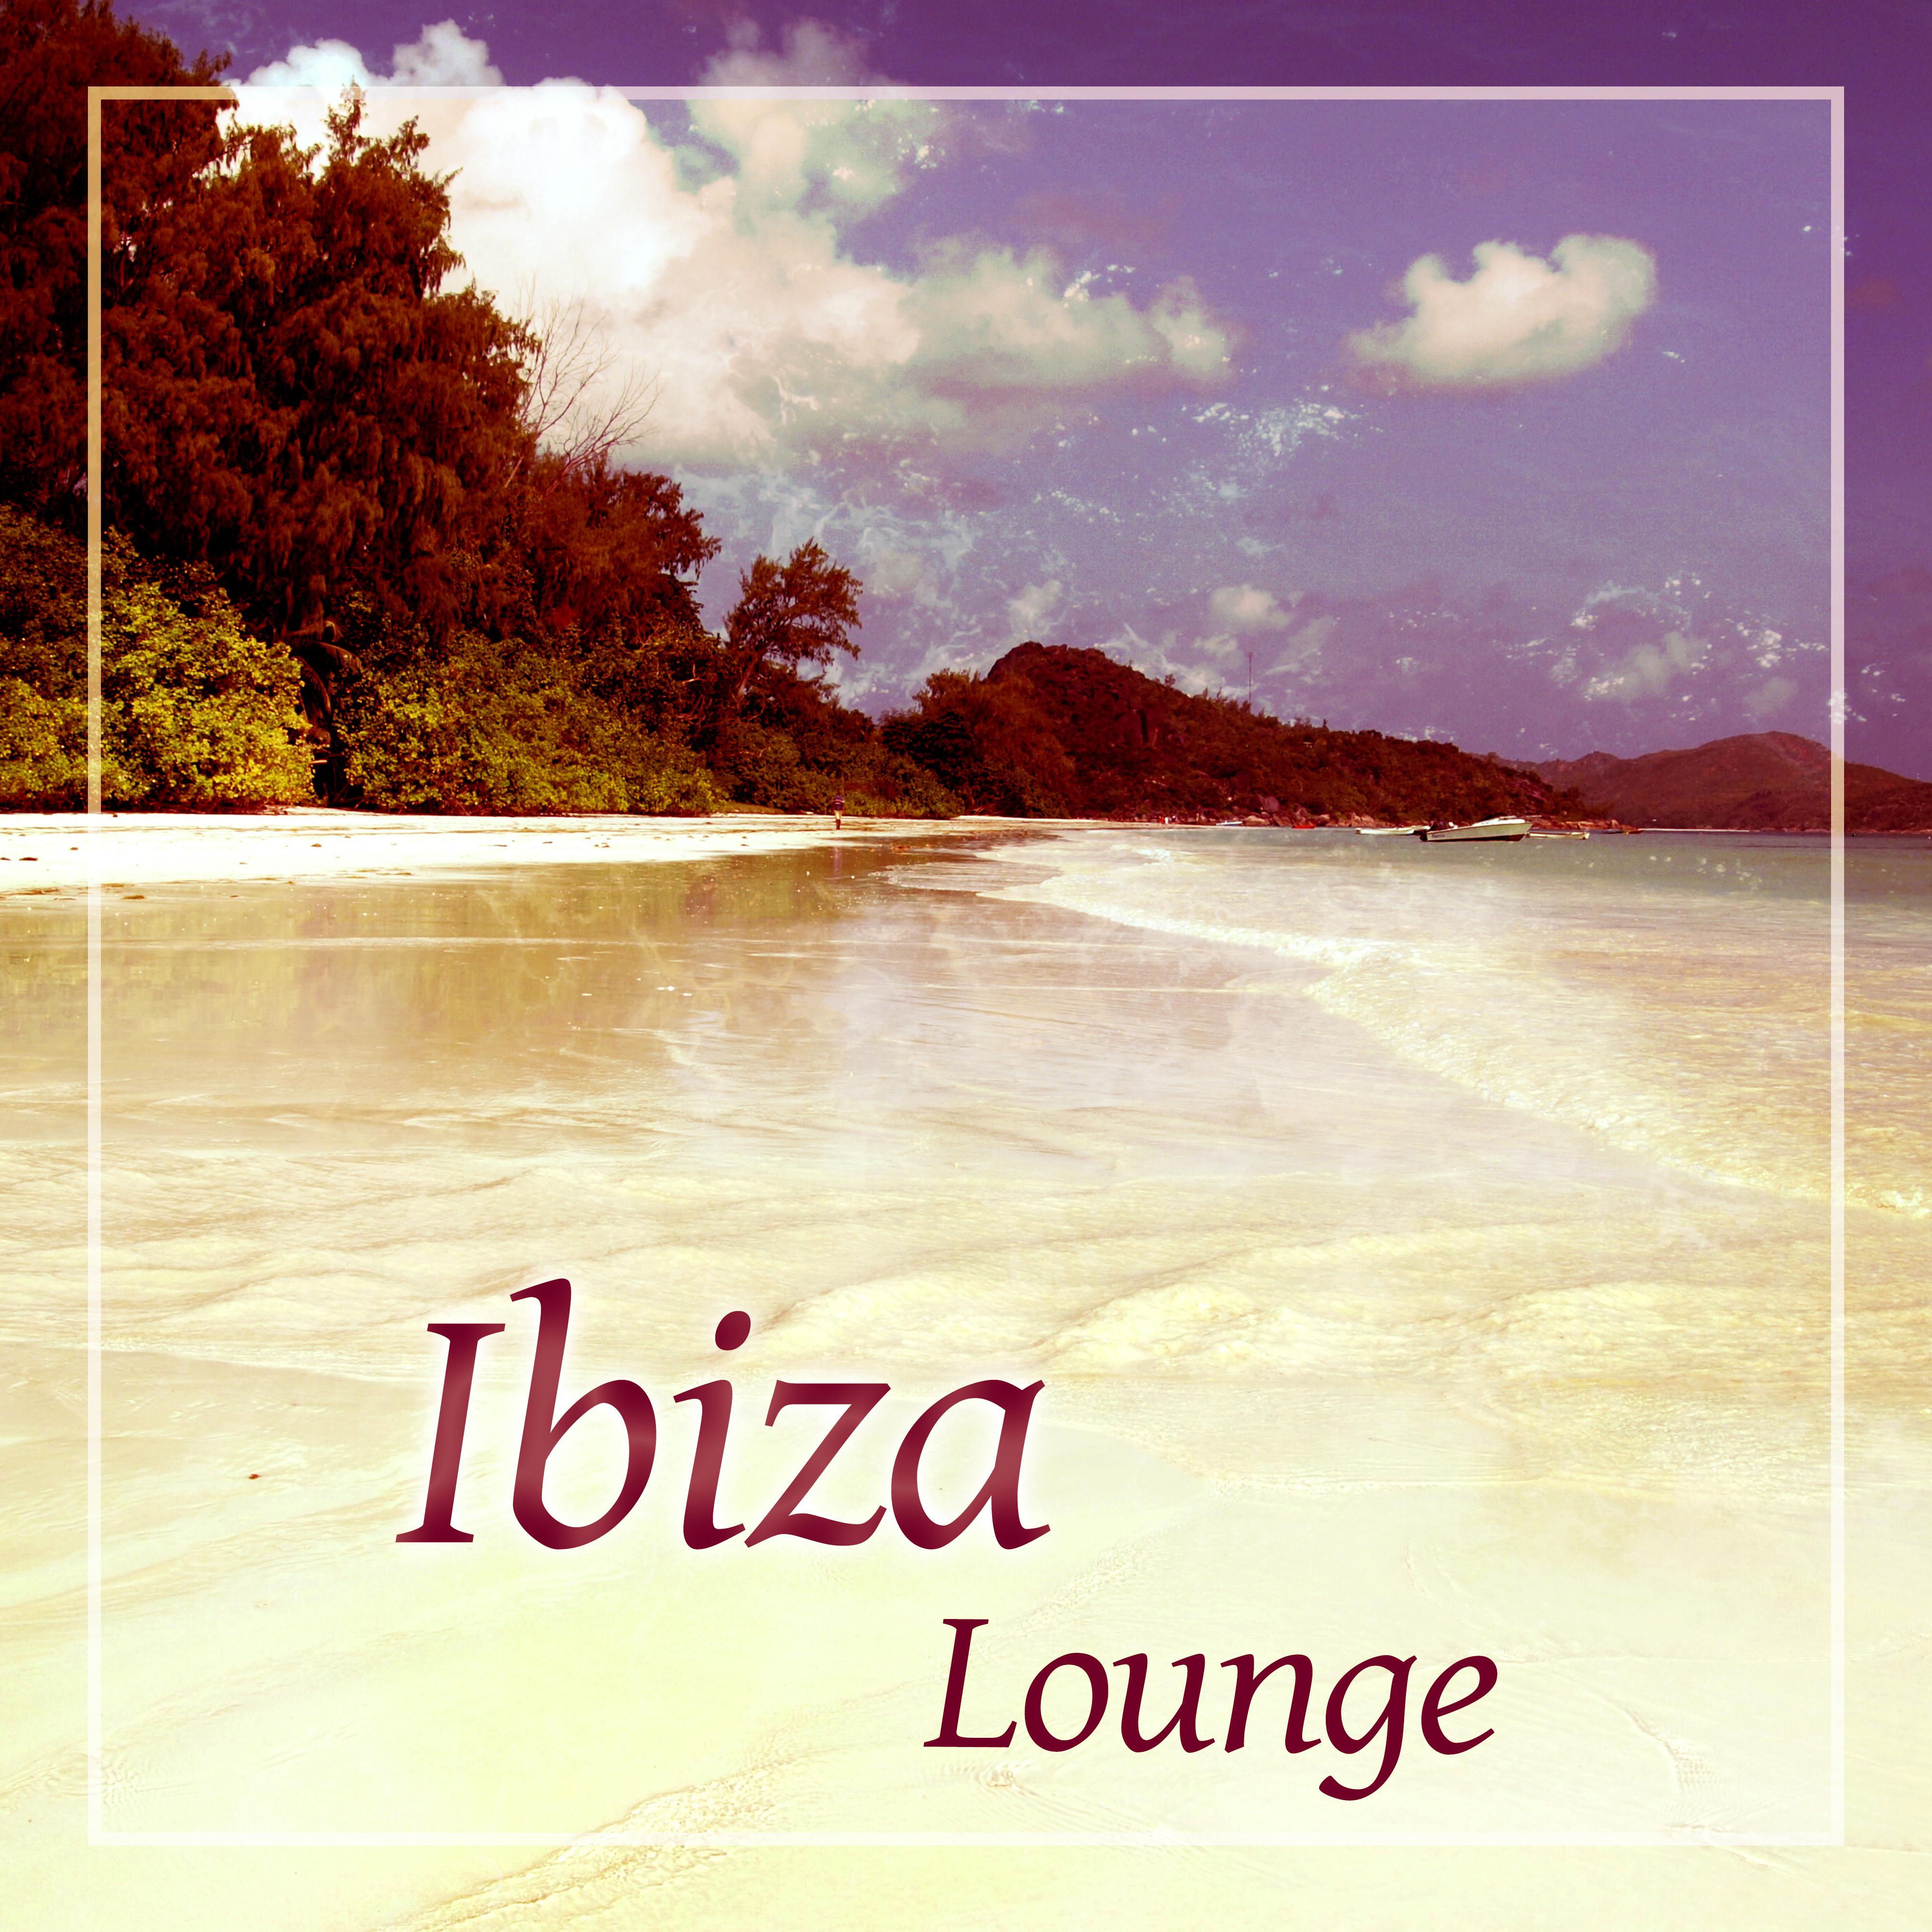 Ibiza Lounge – Born to Chill, Bossa Chill Out, Sunrise, Beach Party